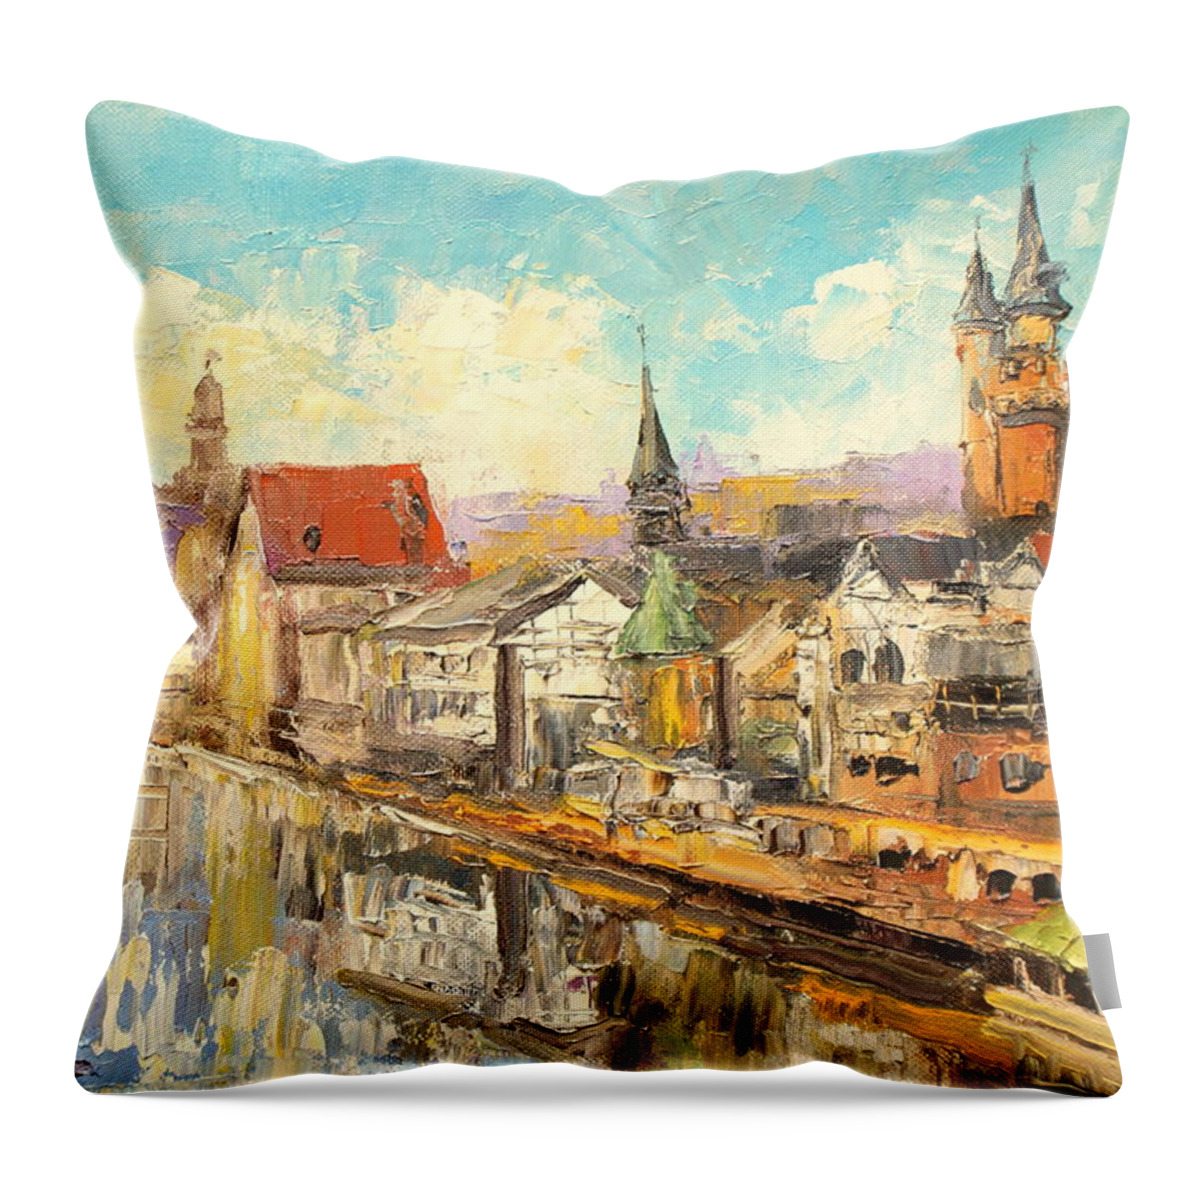 Paris Throw Pillow featuring the painting Old Paris by Luke Karcz